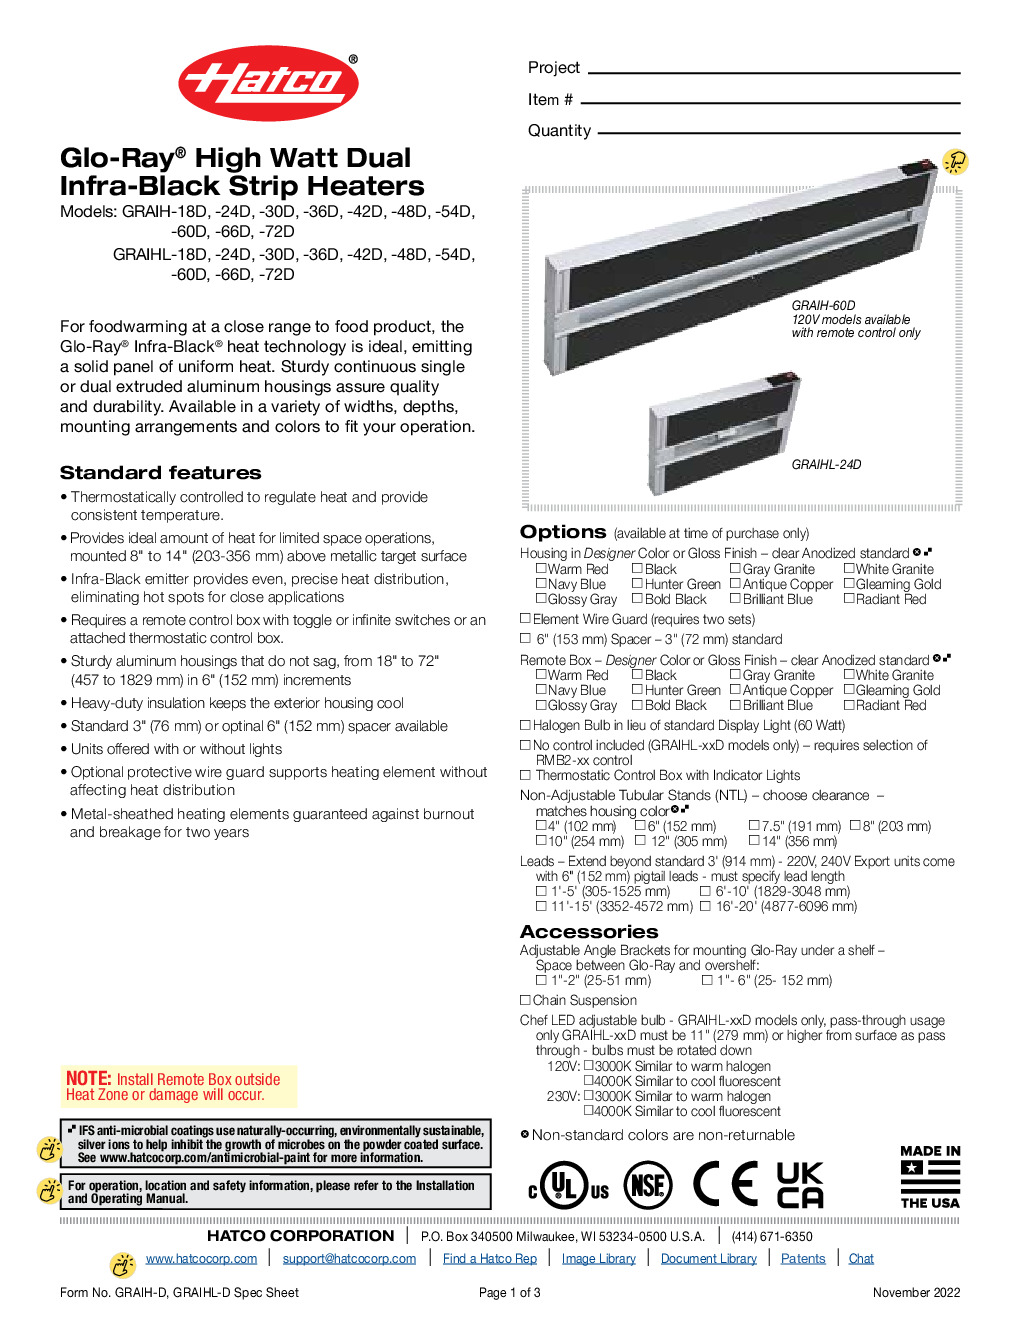 Hatco GRAIHL-72D6 Strip Type Heat Lamp